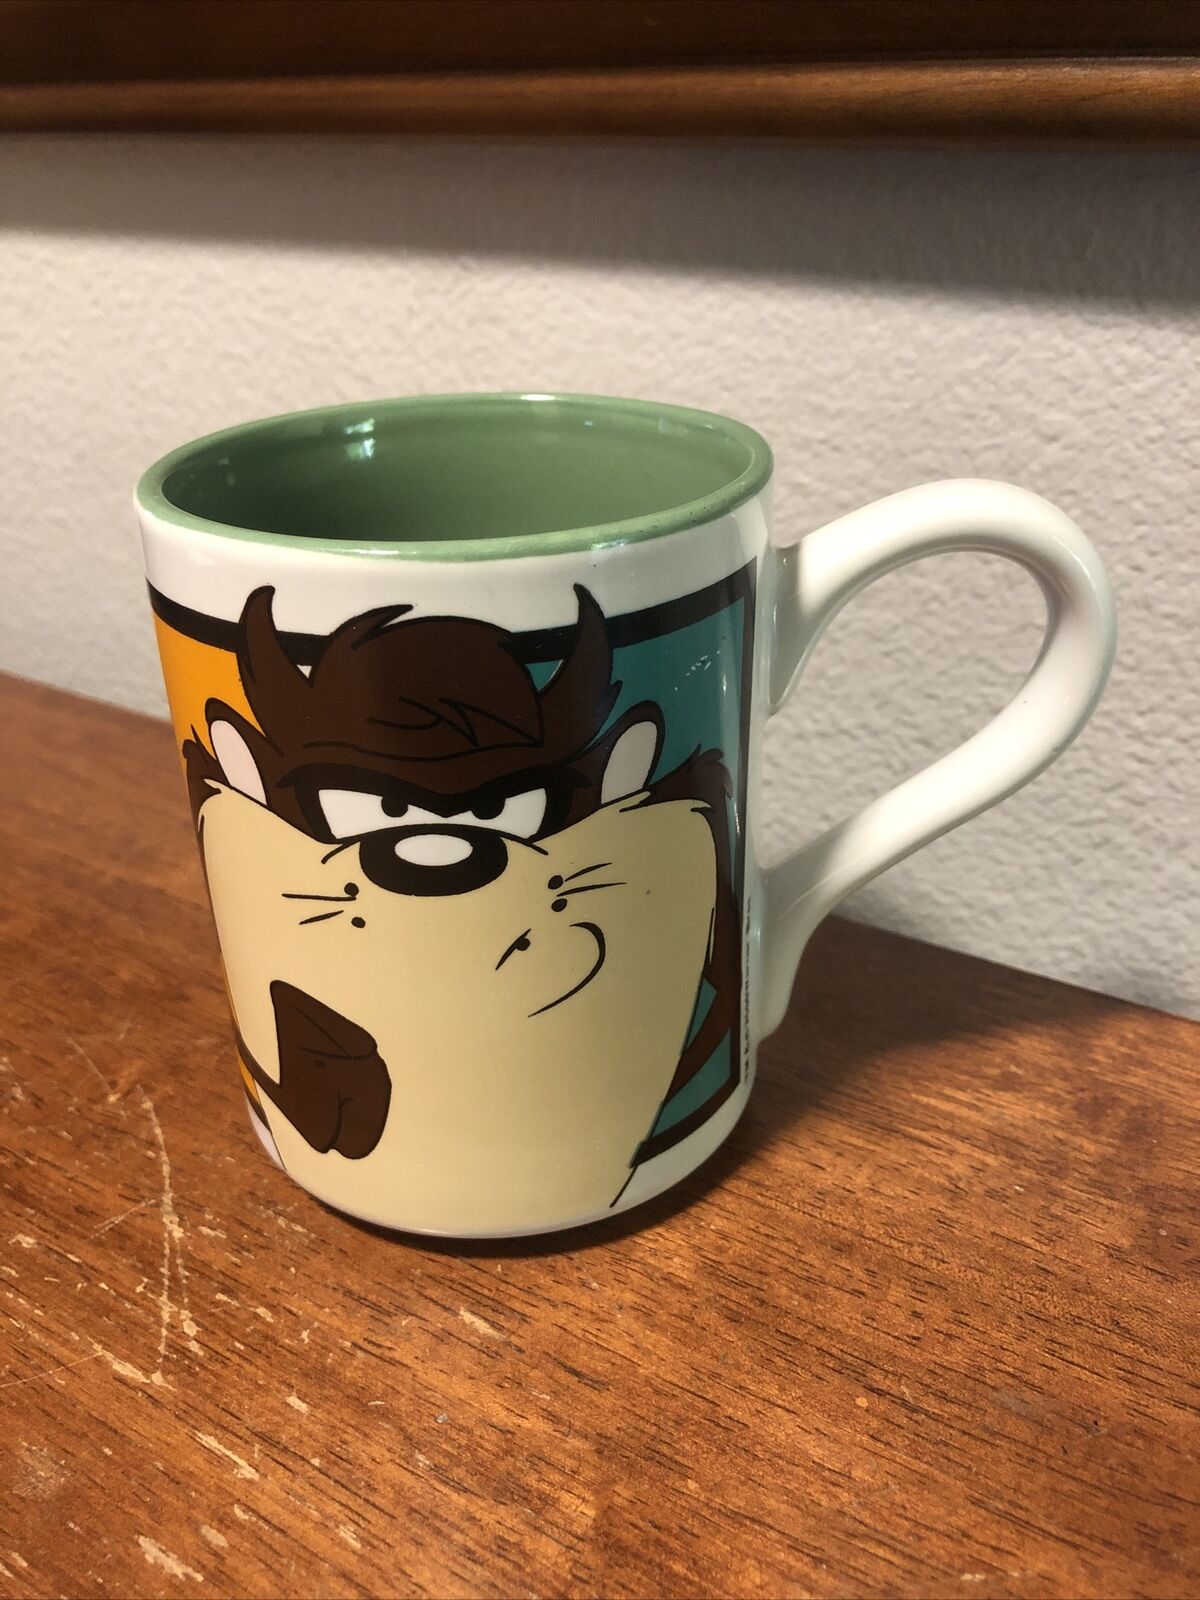 2000 Warner Bros. Taz Green Coffee Mug Multi taz and symbols printed mug